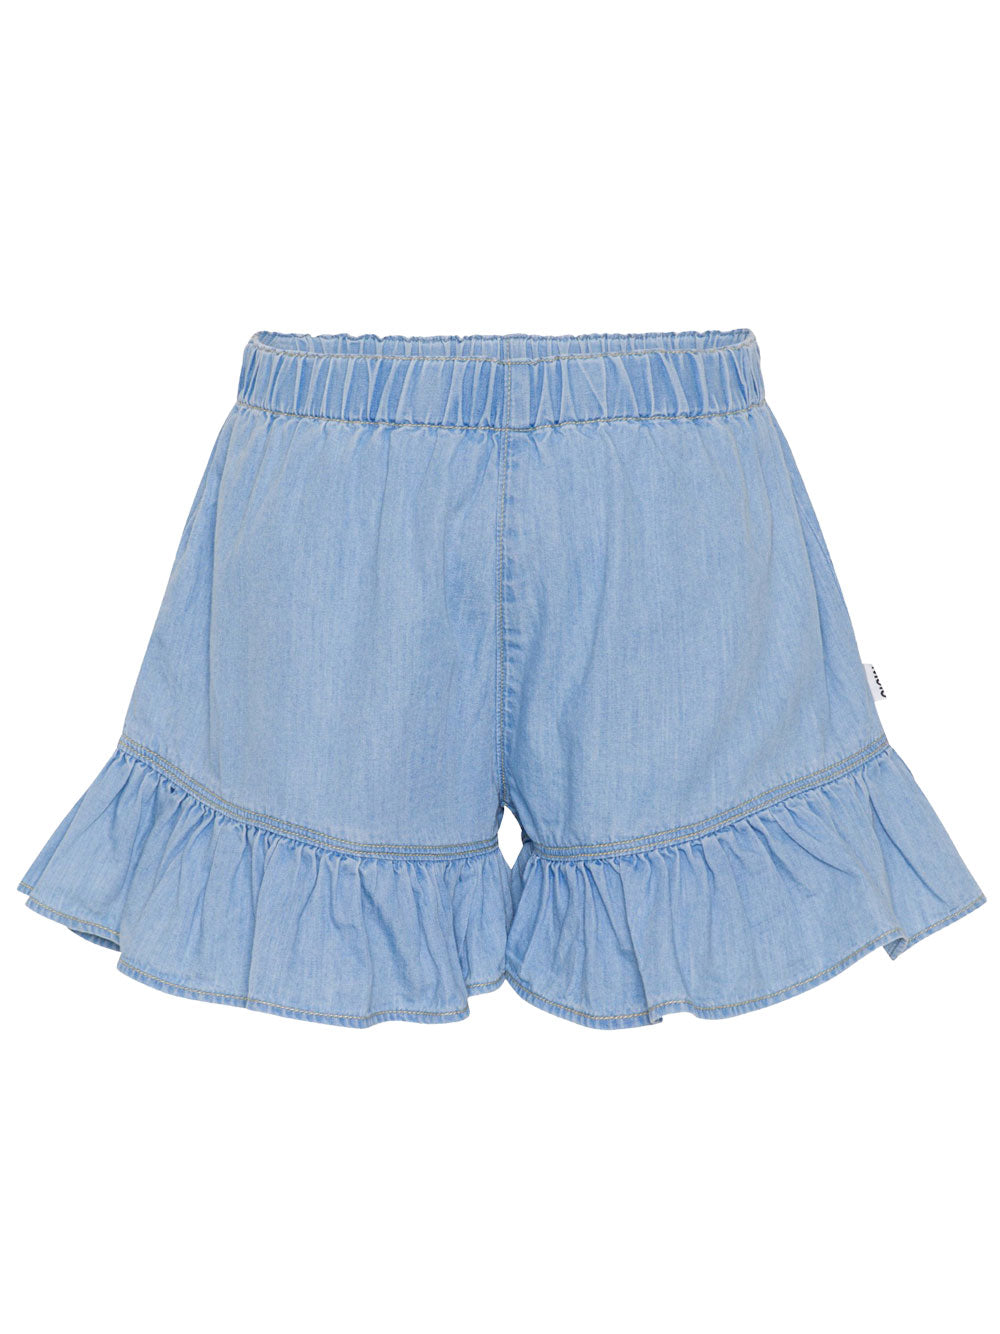 PREORDER: Abba Summer Wash Shorts